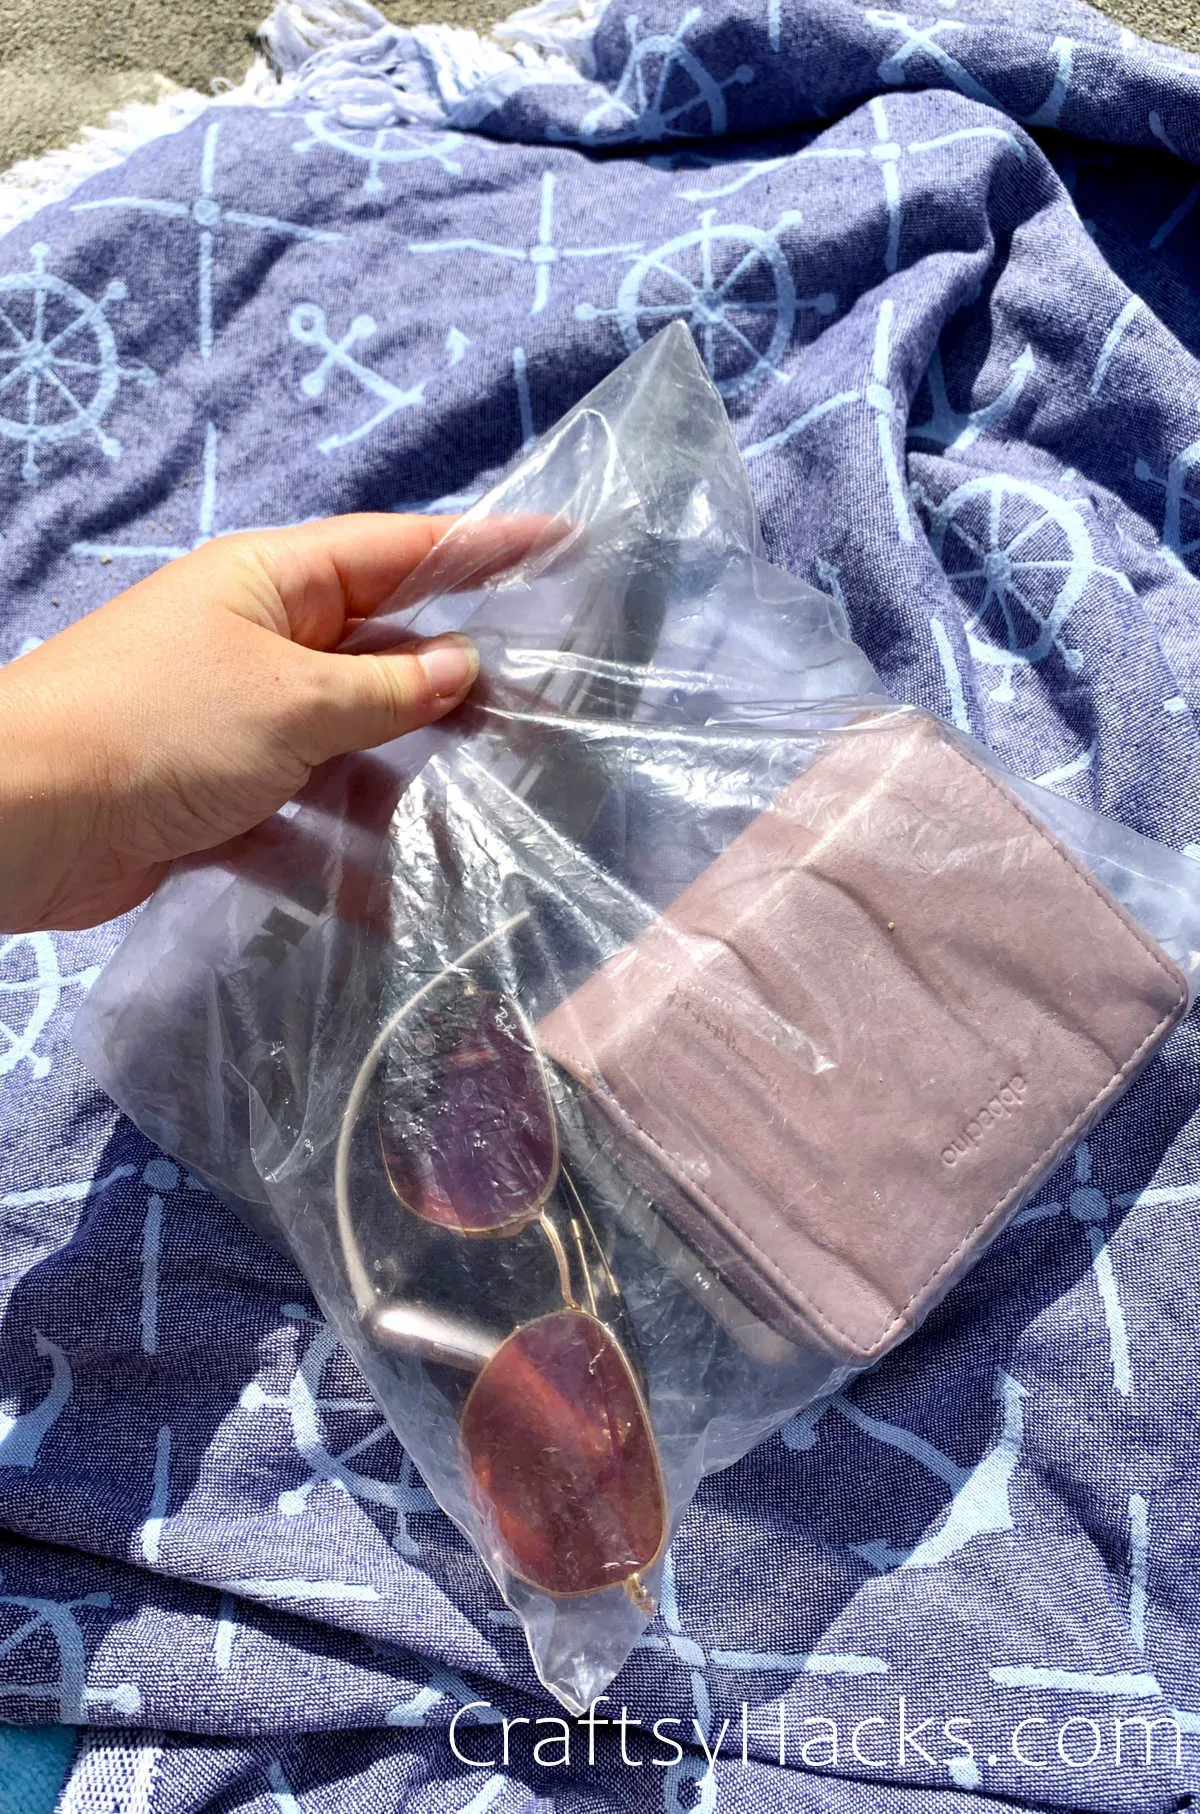 waterproof valuables in resealable bag